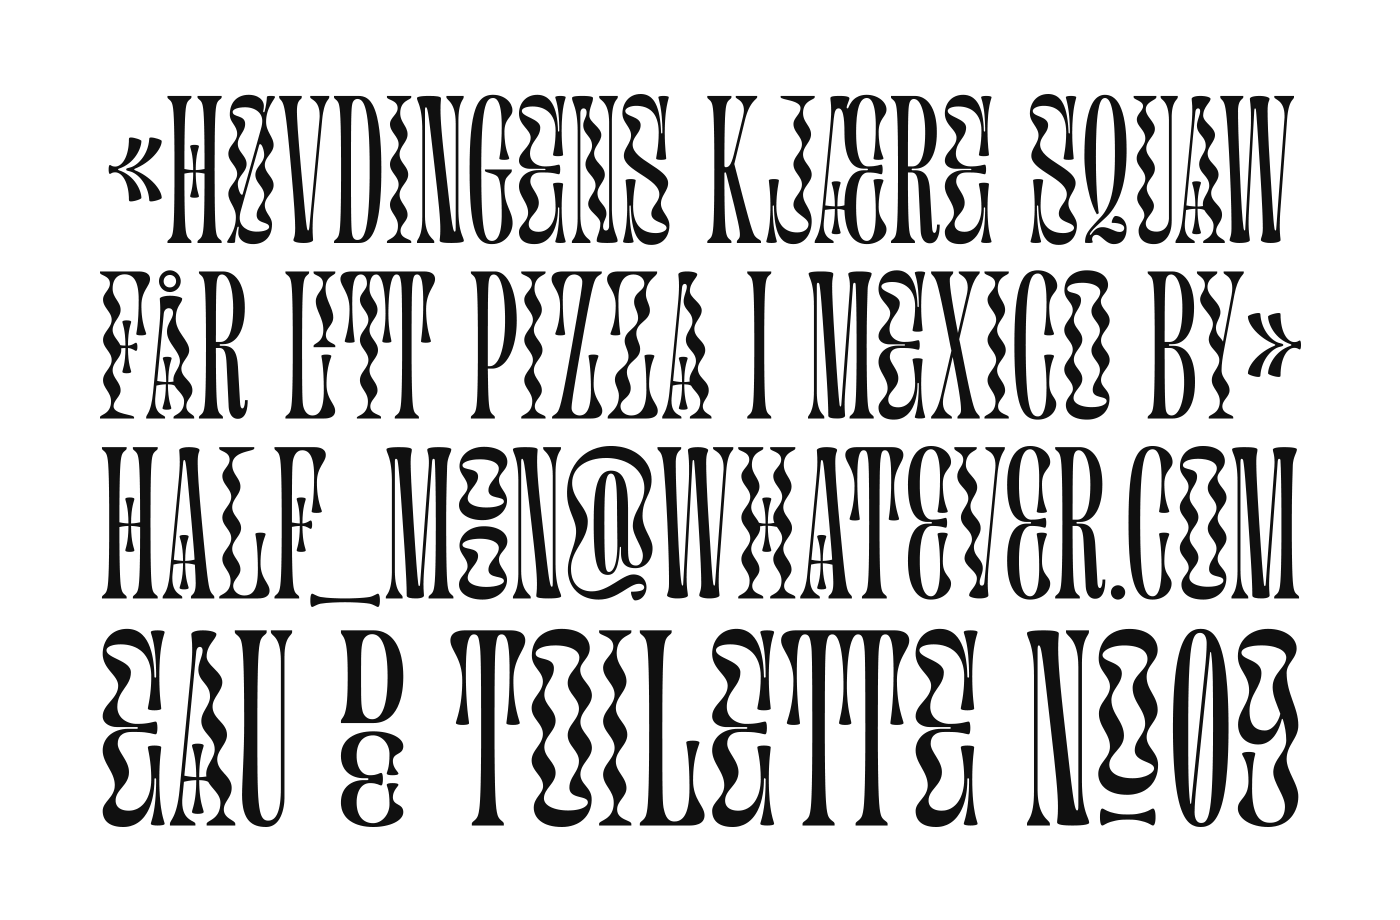 Retrofuturistic Typography Designs of the New 20's